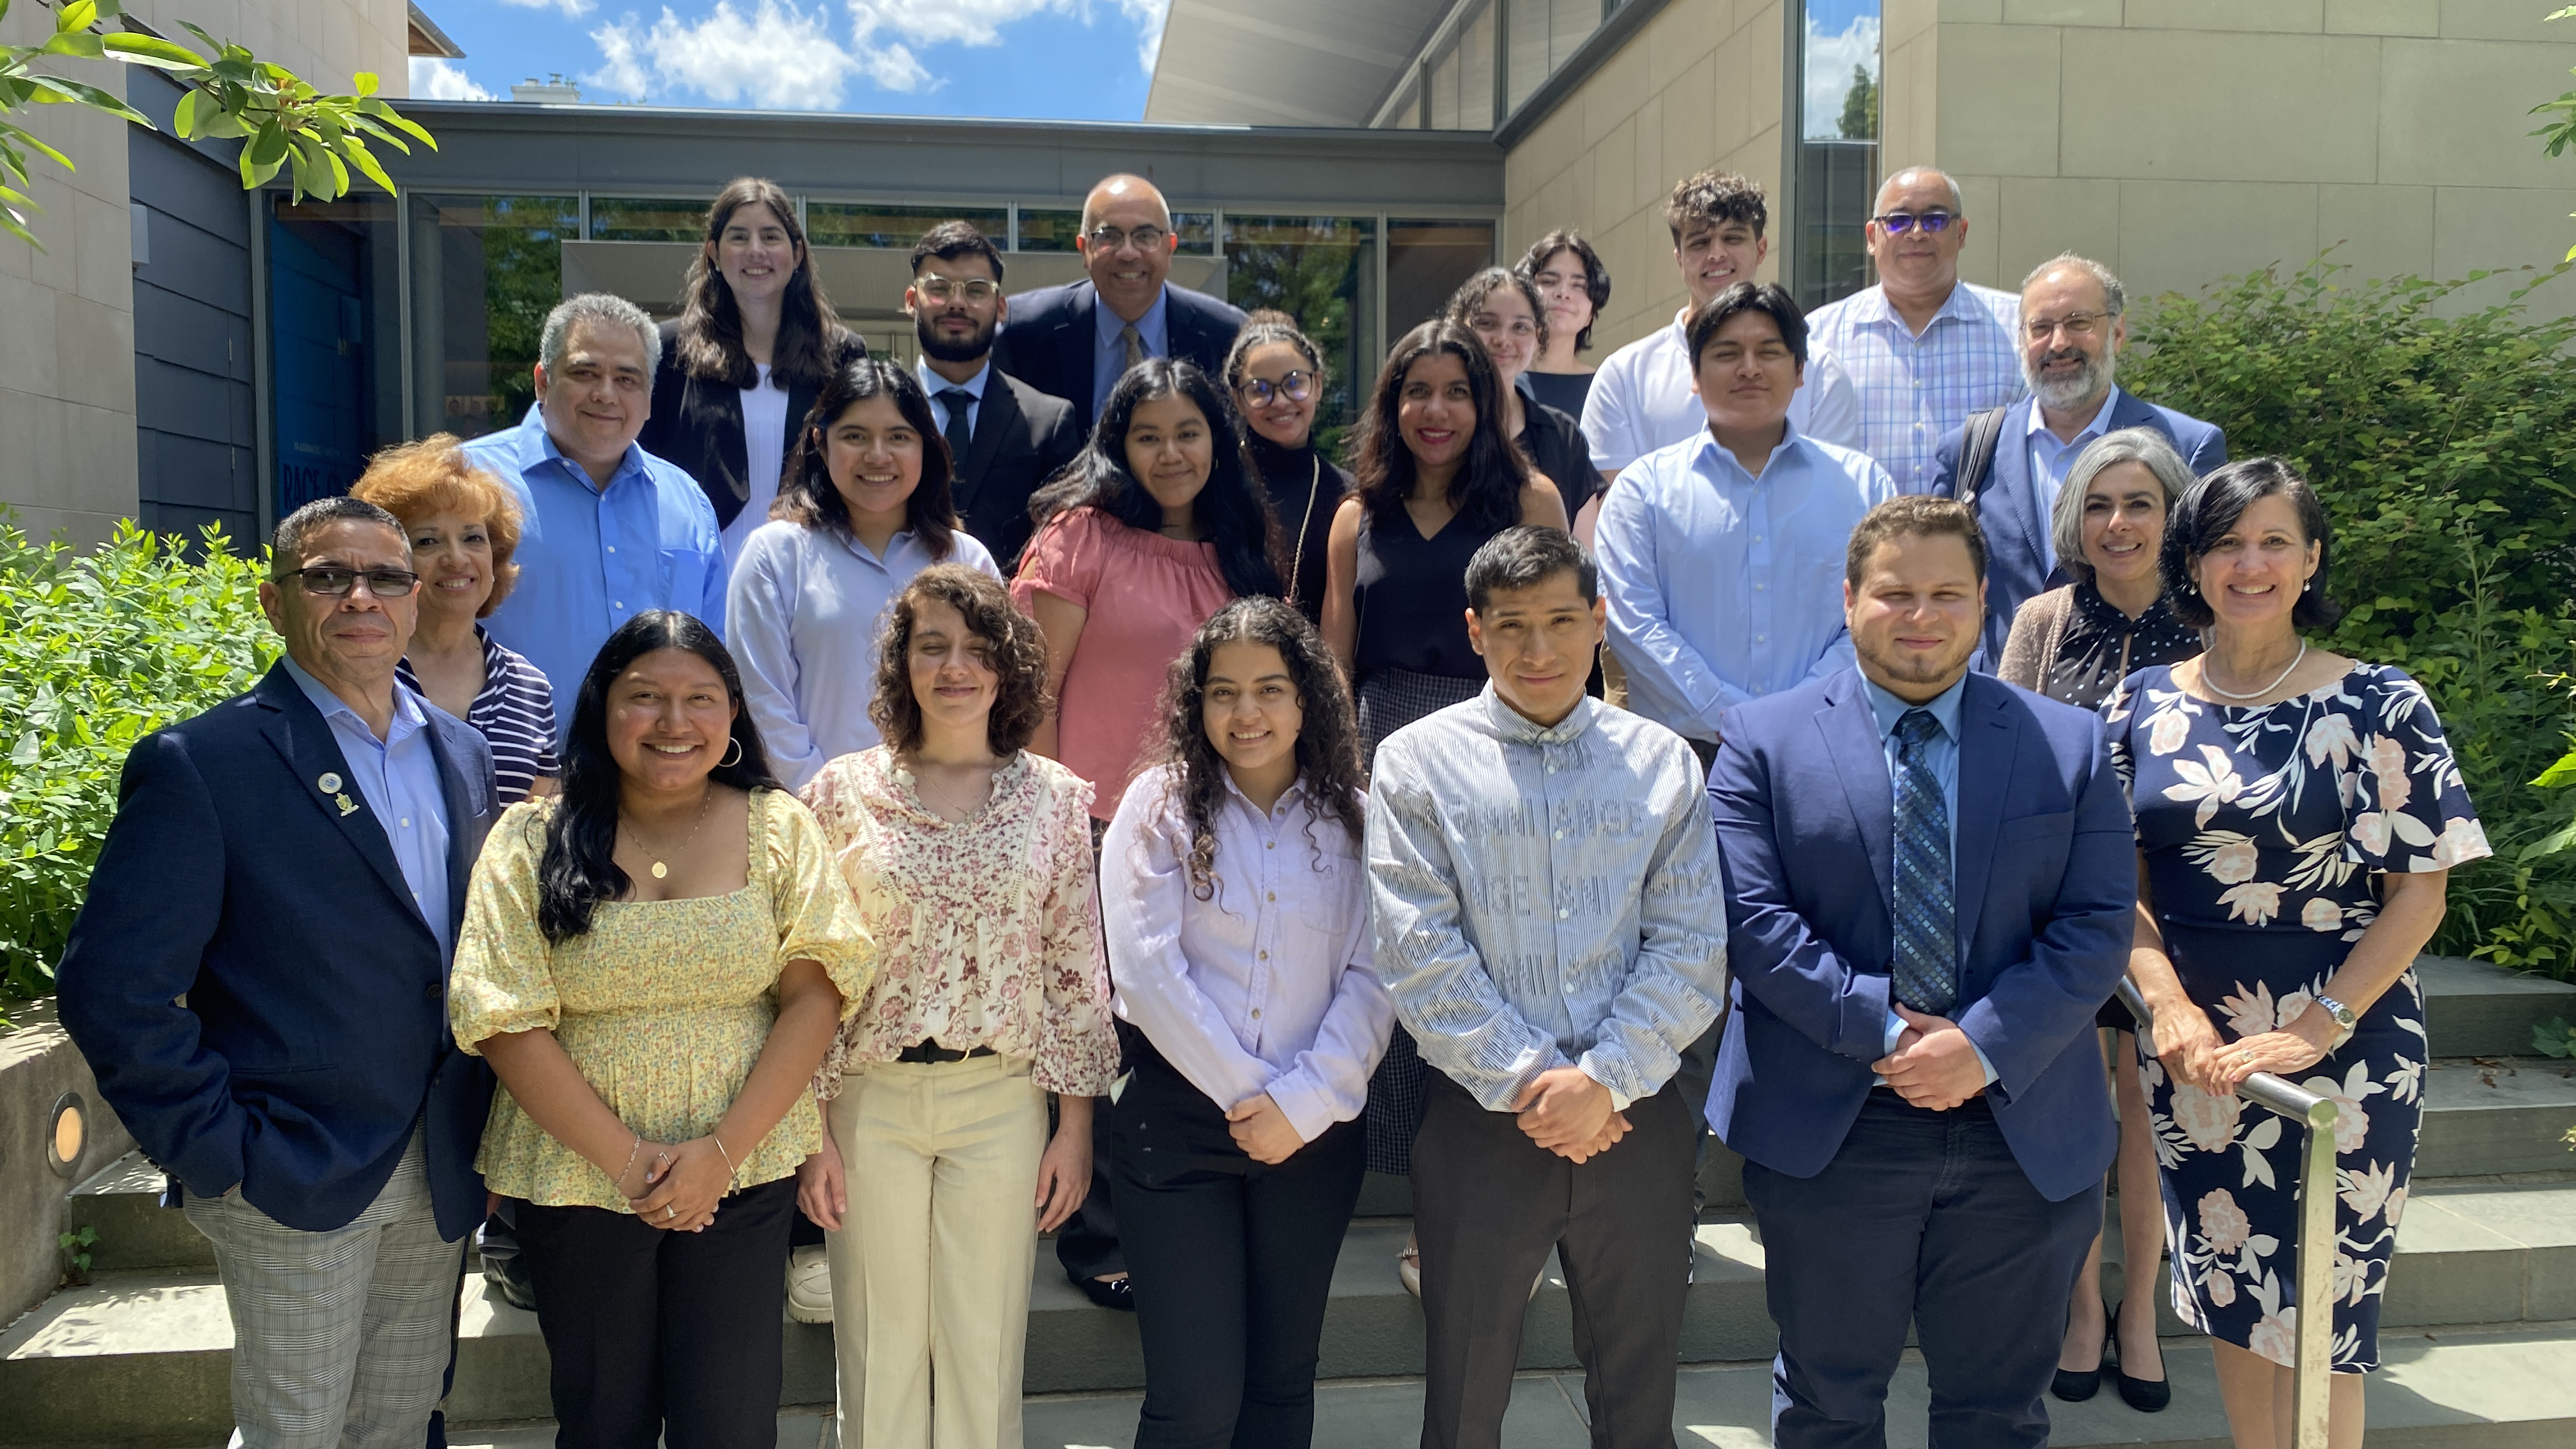 Members of the Governor’s Hispanic Fellows Program